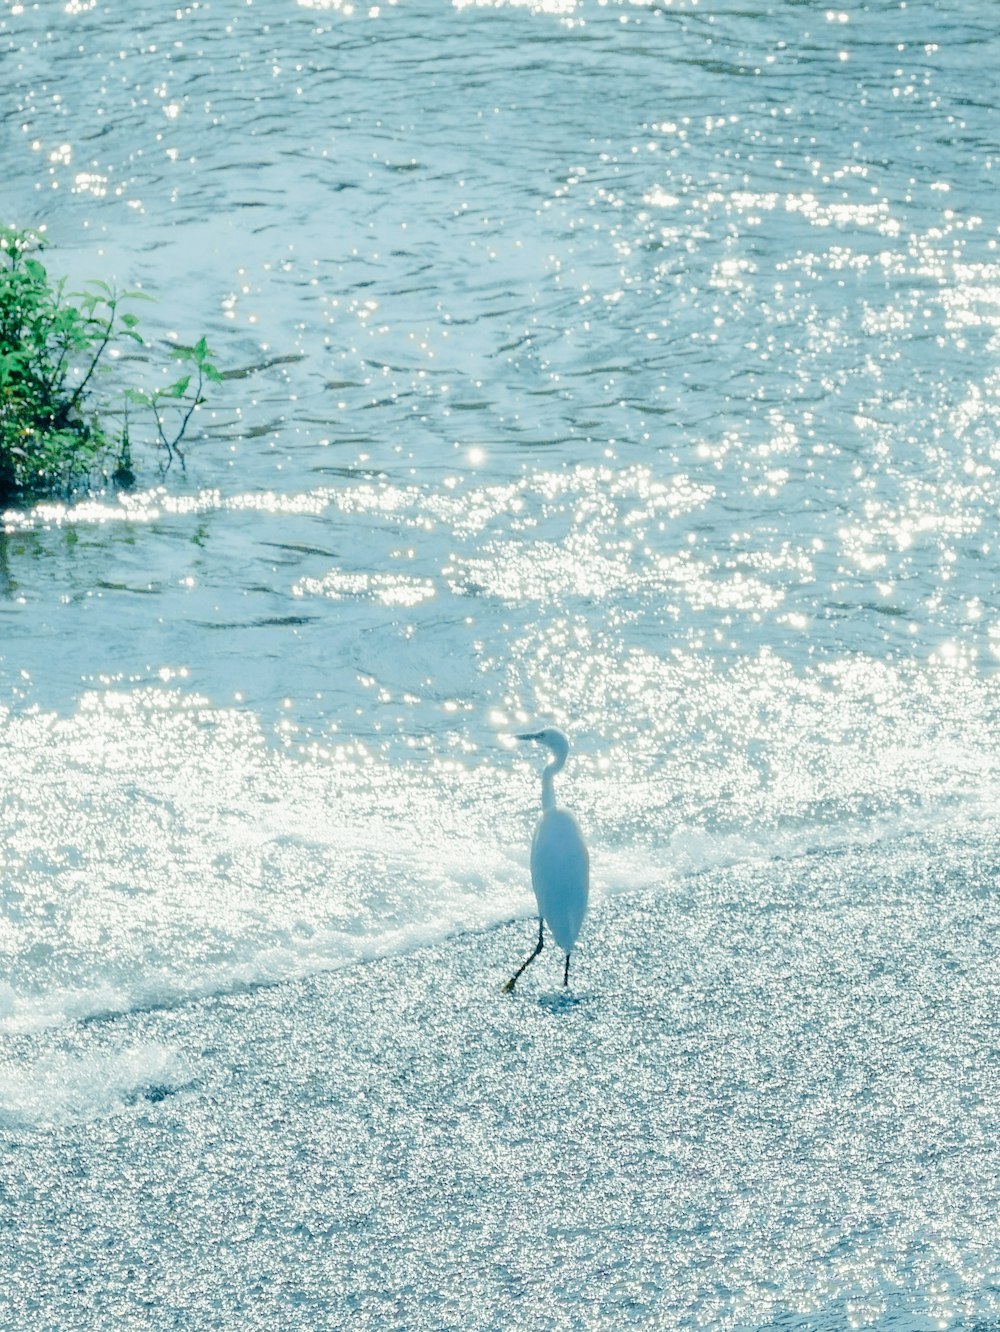 white bird on gray sand near body of water during daytime